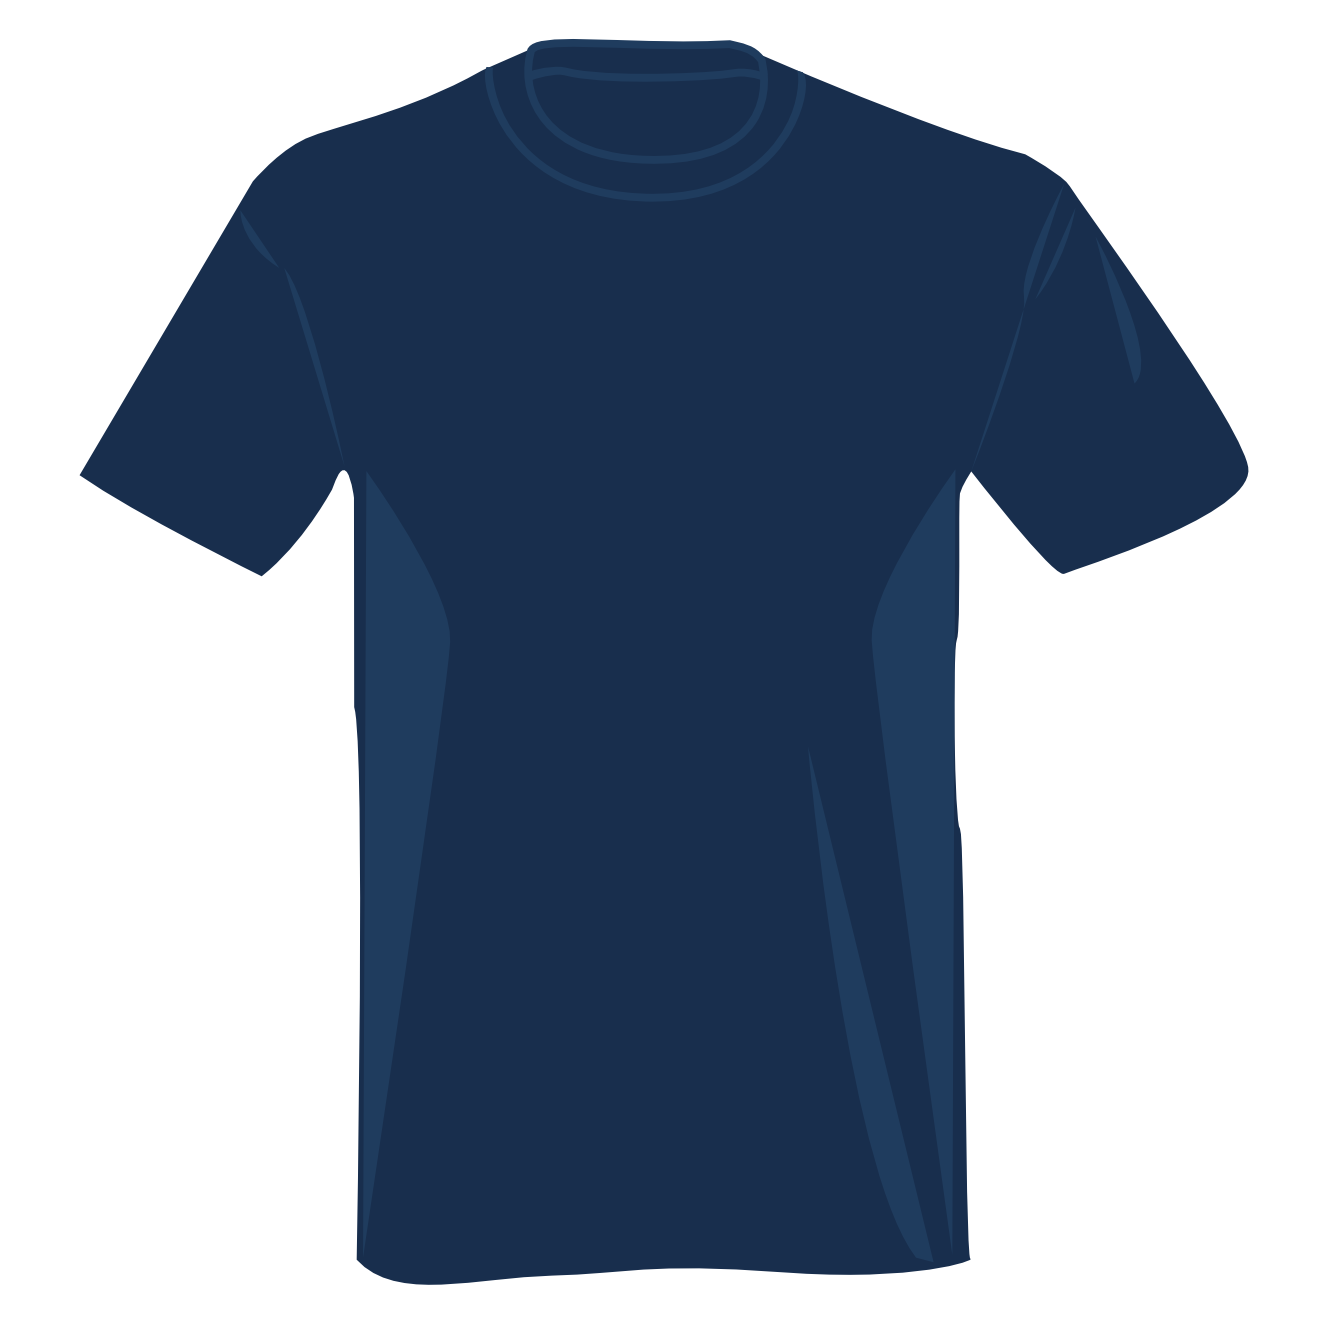 Free T Shirt Clip Art, Download Free T Shirt Clip Art png images, Free ...